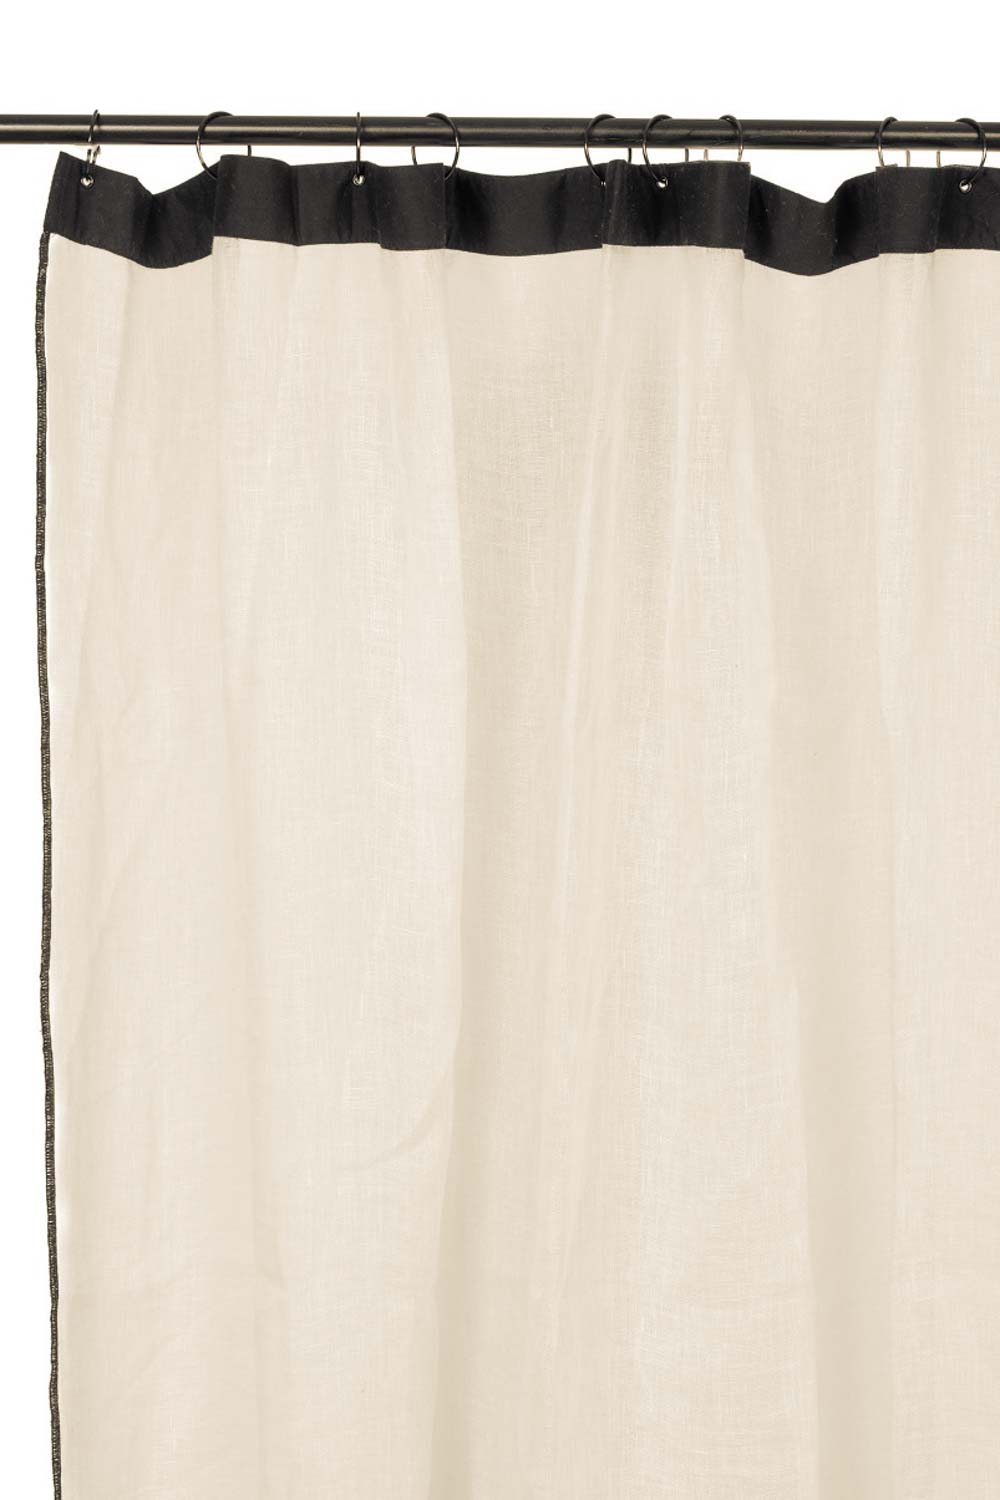 rideau en voile de lin bonifacio 140x280 cm naturel-harmony haomy